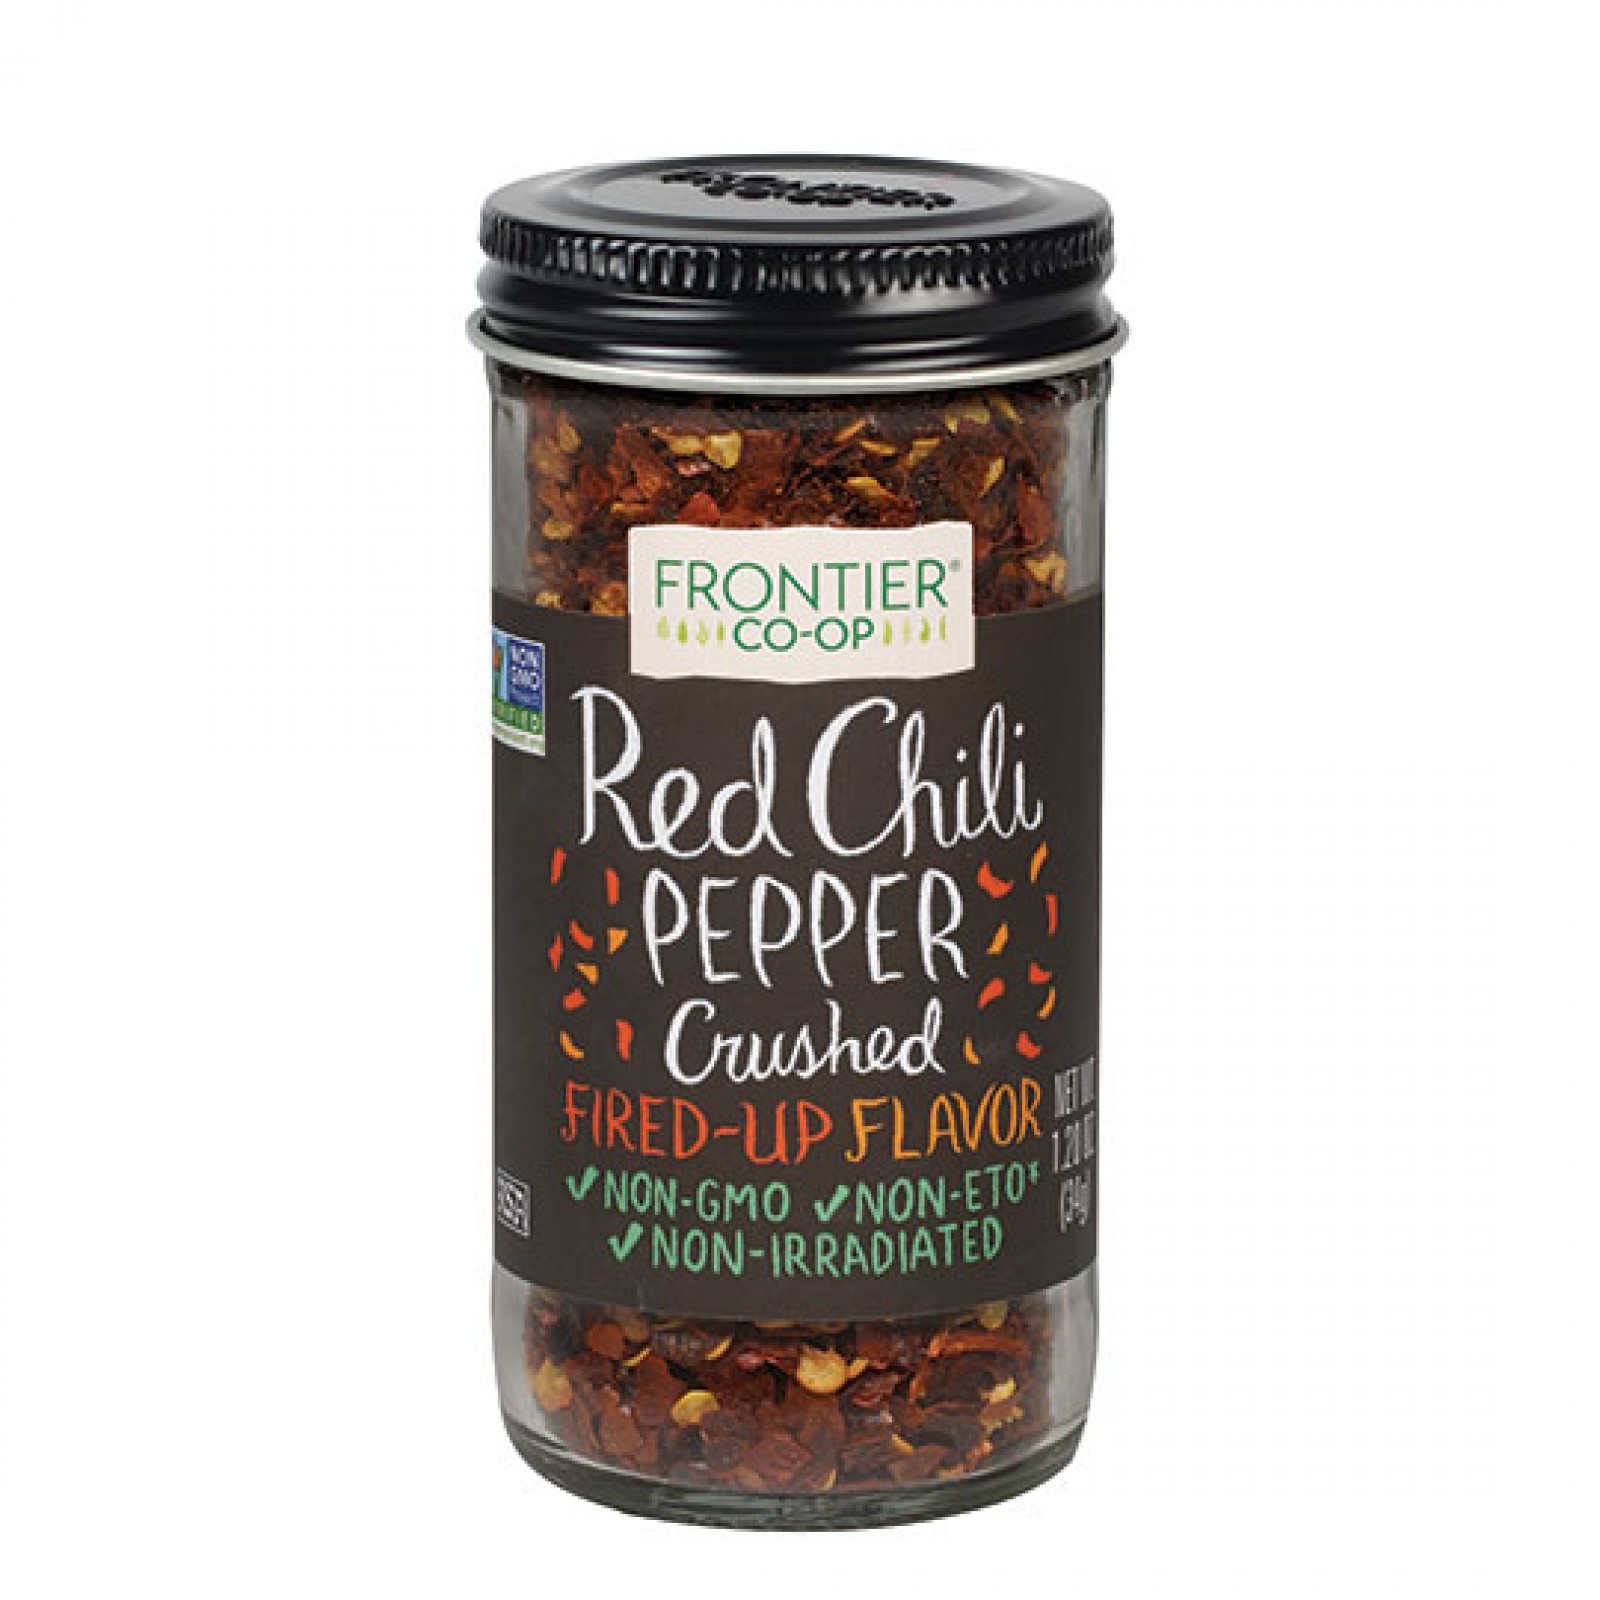 Red chili pepper photo